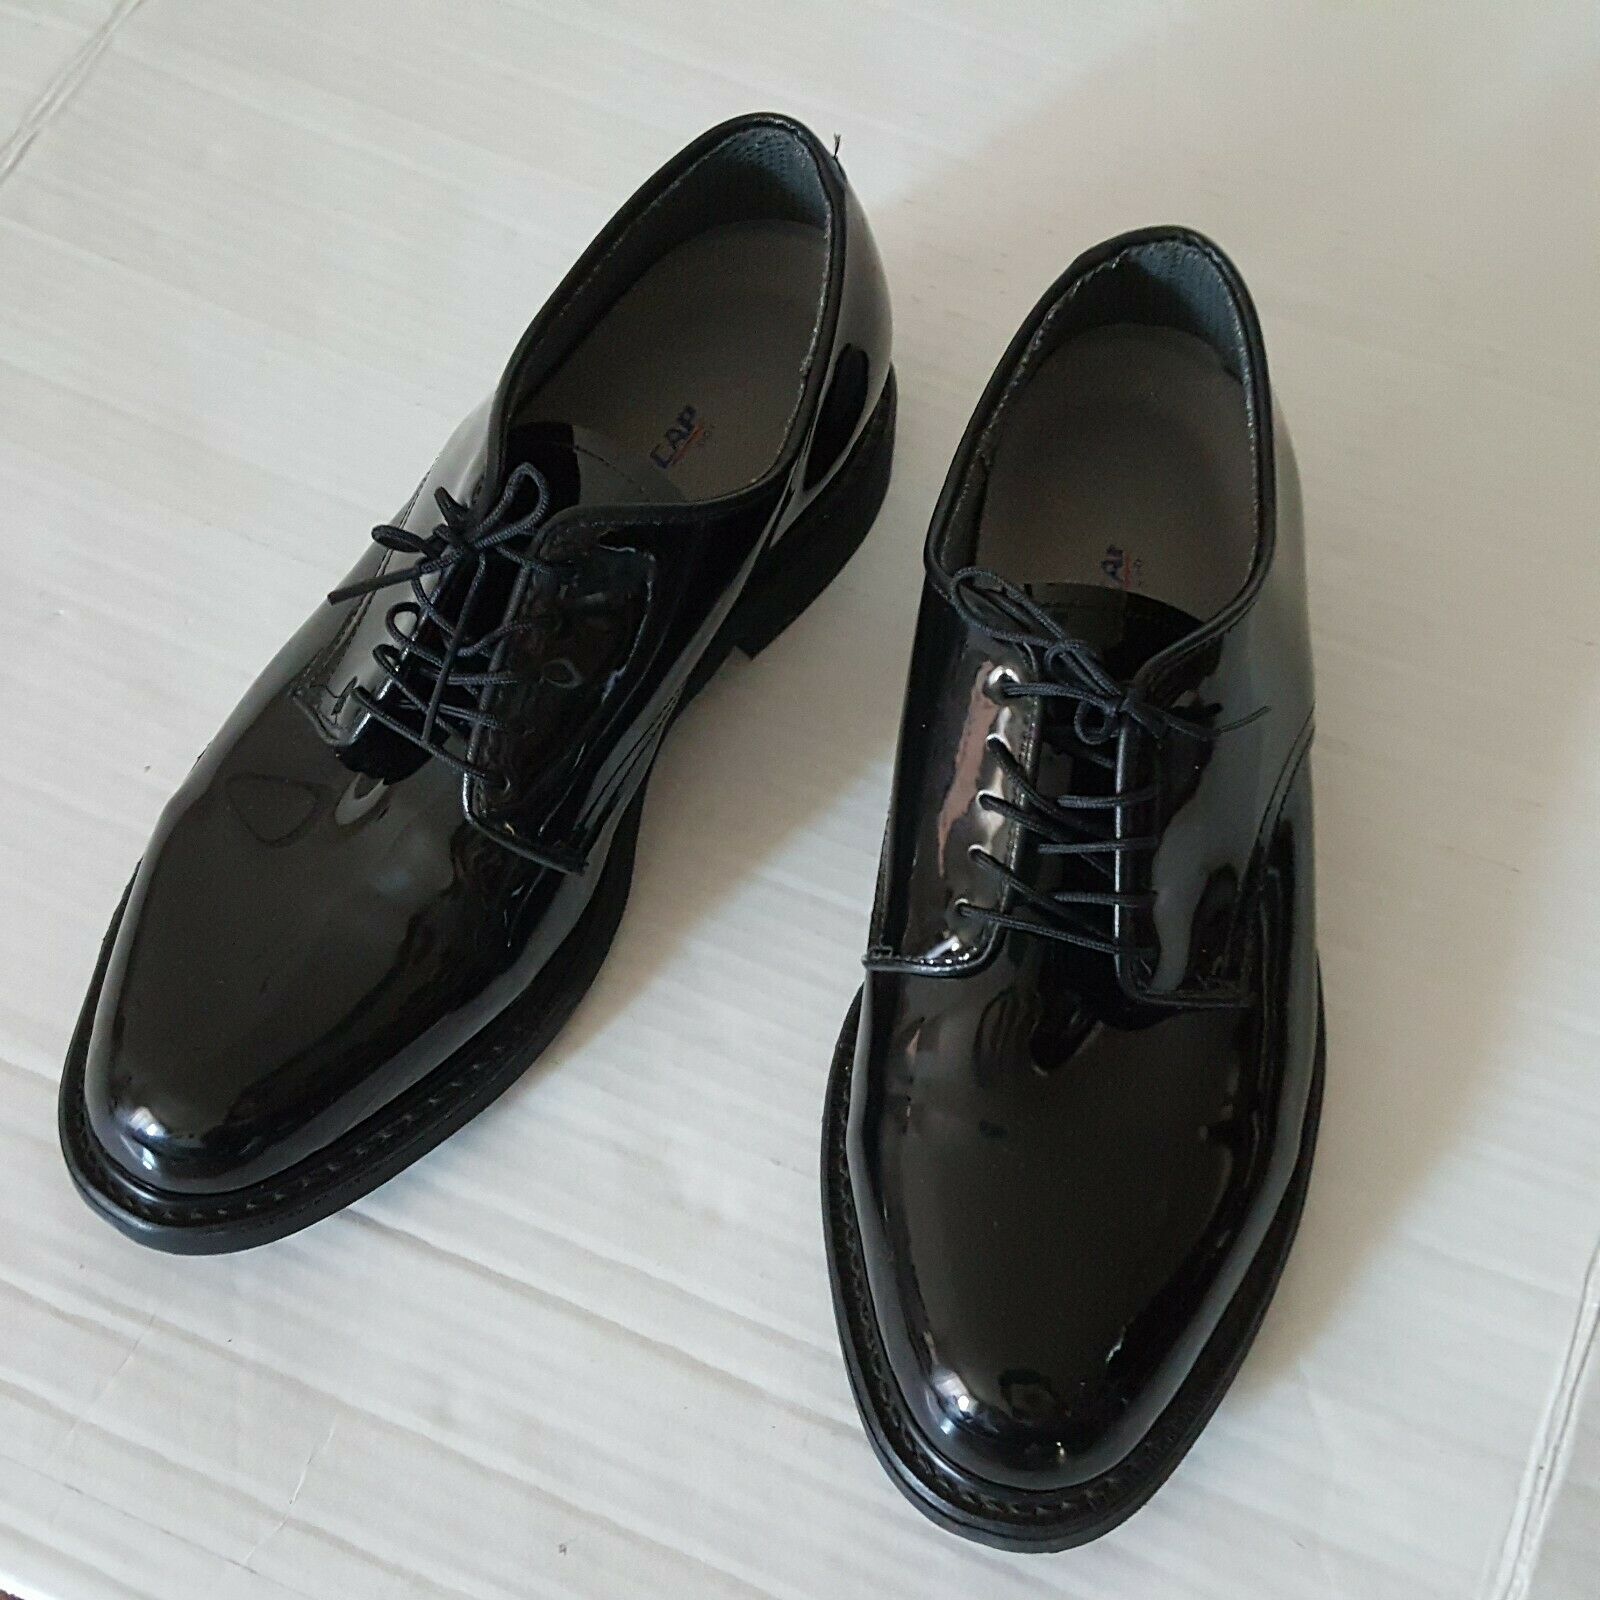 Vibram Mens Dress Shoes Glossy Black Oxford Avonite Hypalon Non Marking Uniform